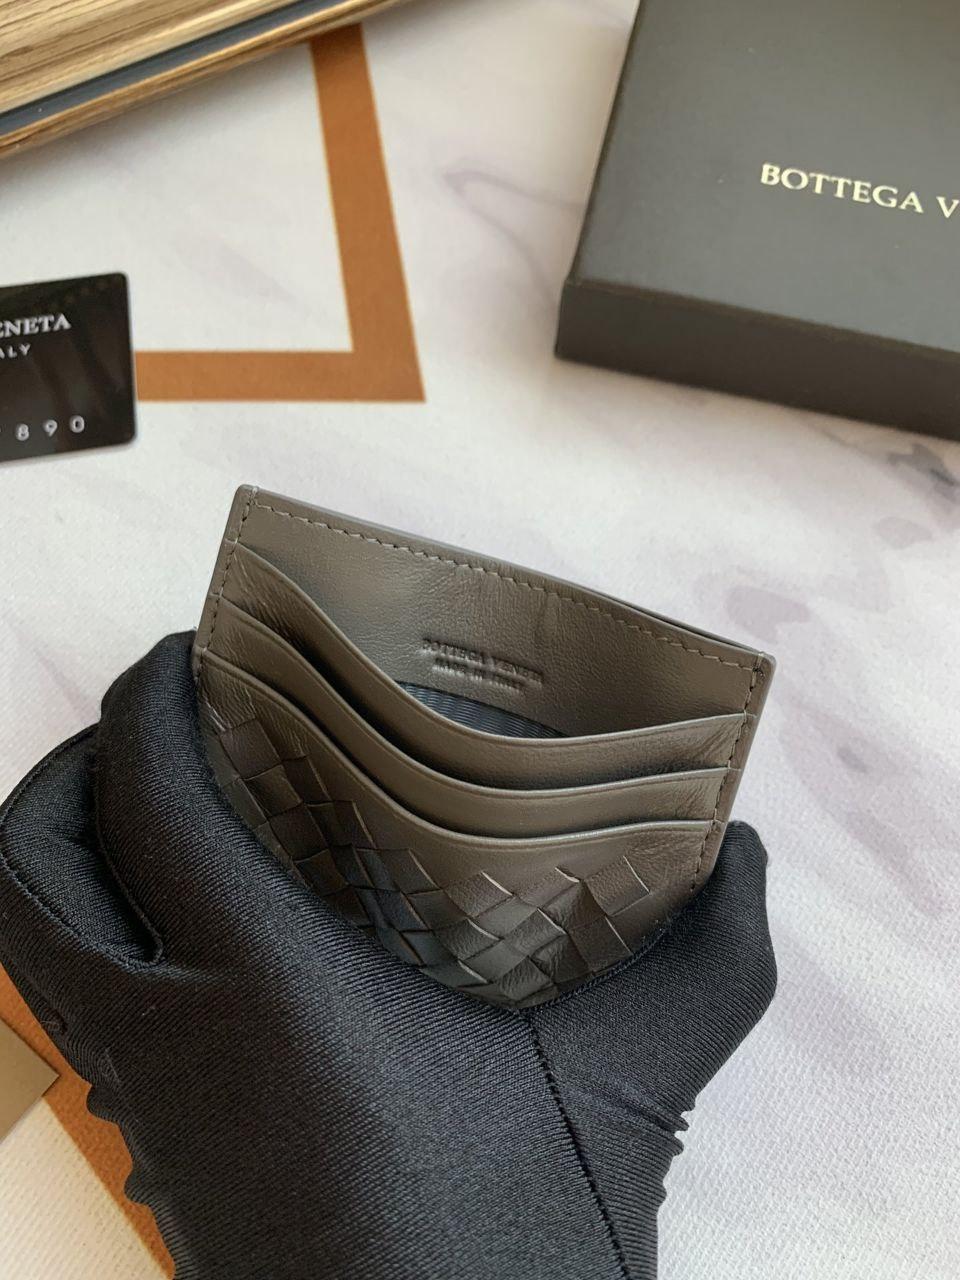 Bottega Veneta 보테가 베네타 인트레치아노 카드 홀더